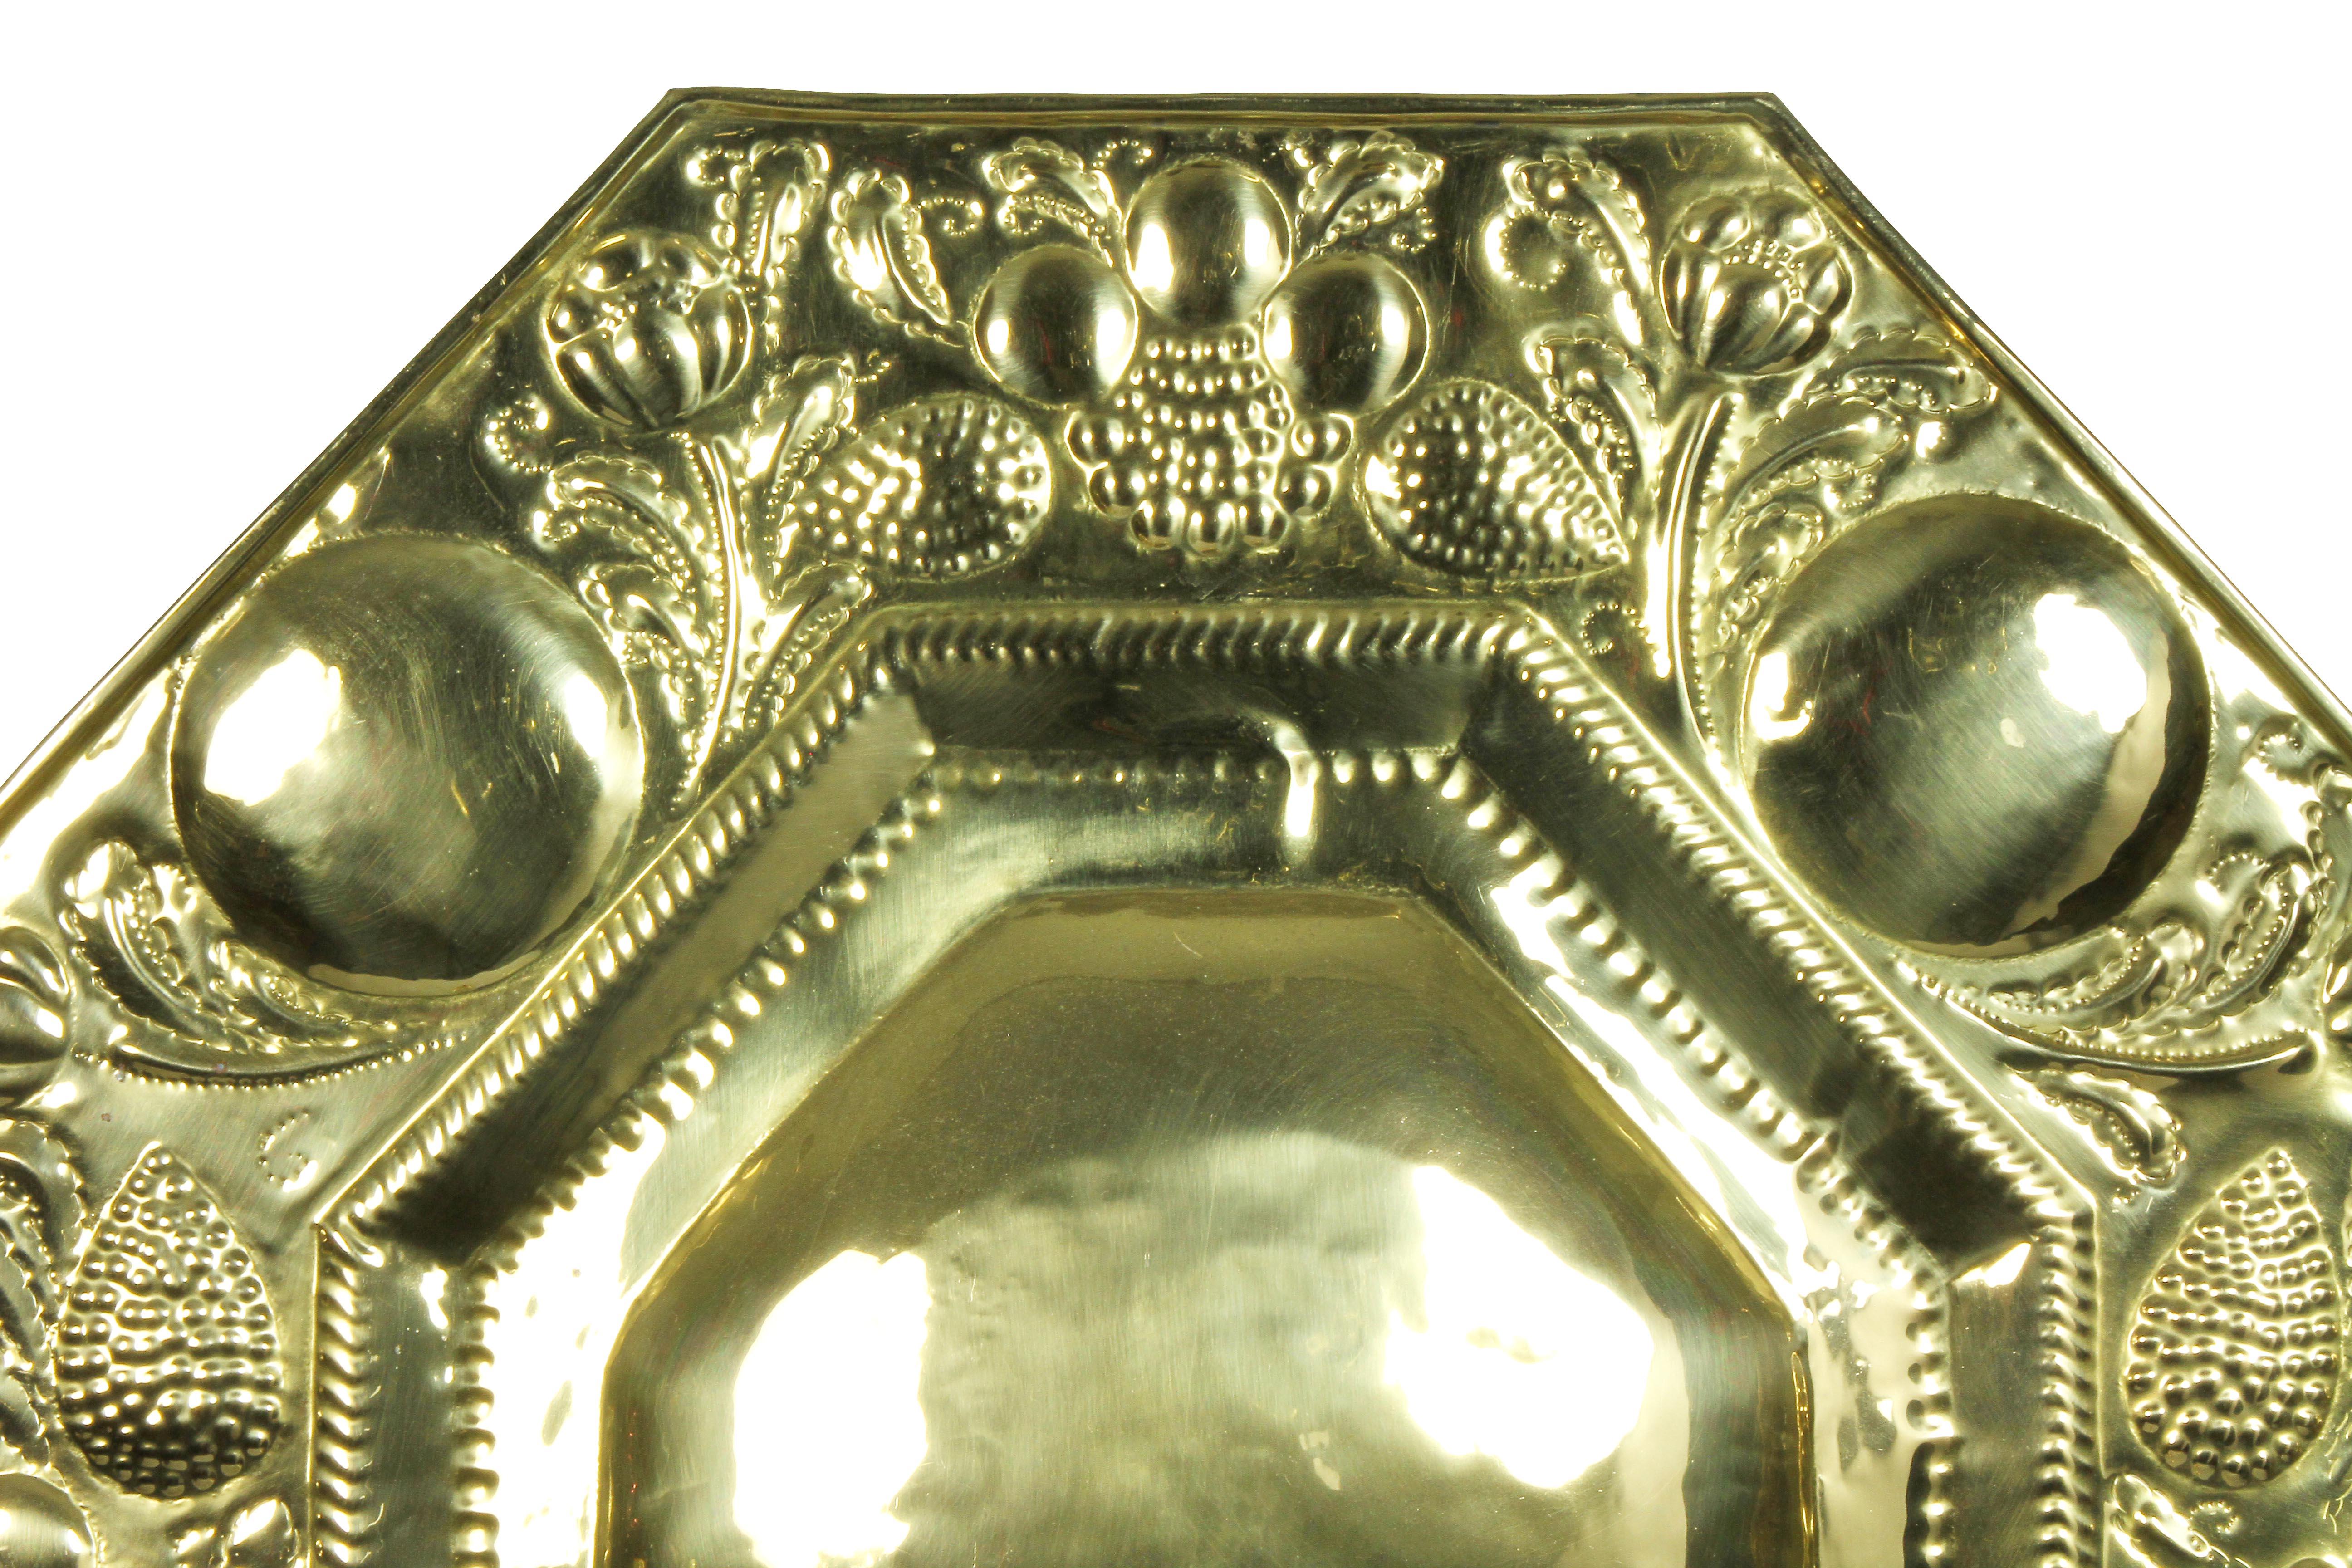 Decorative octagonal hammered brass single light sconce.